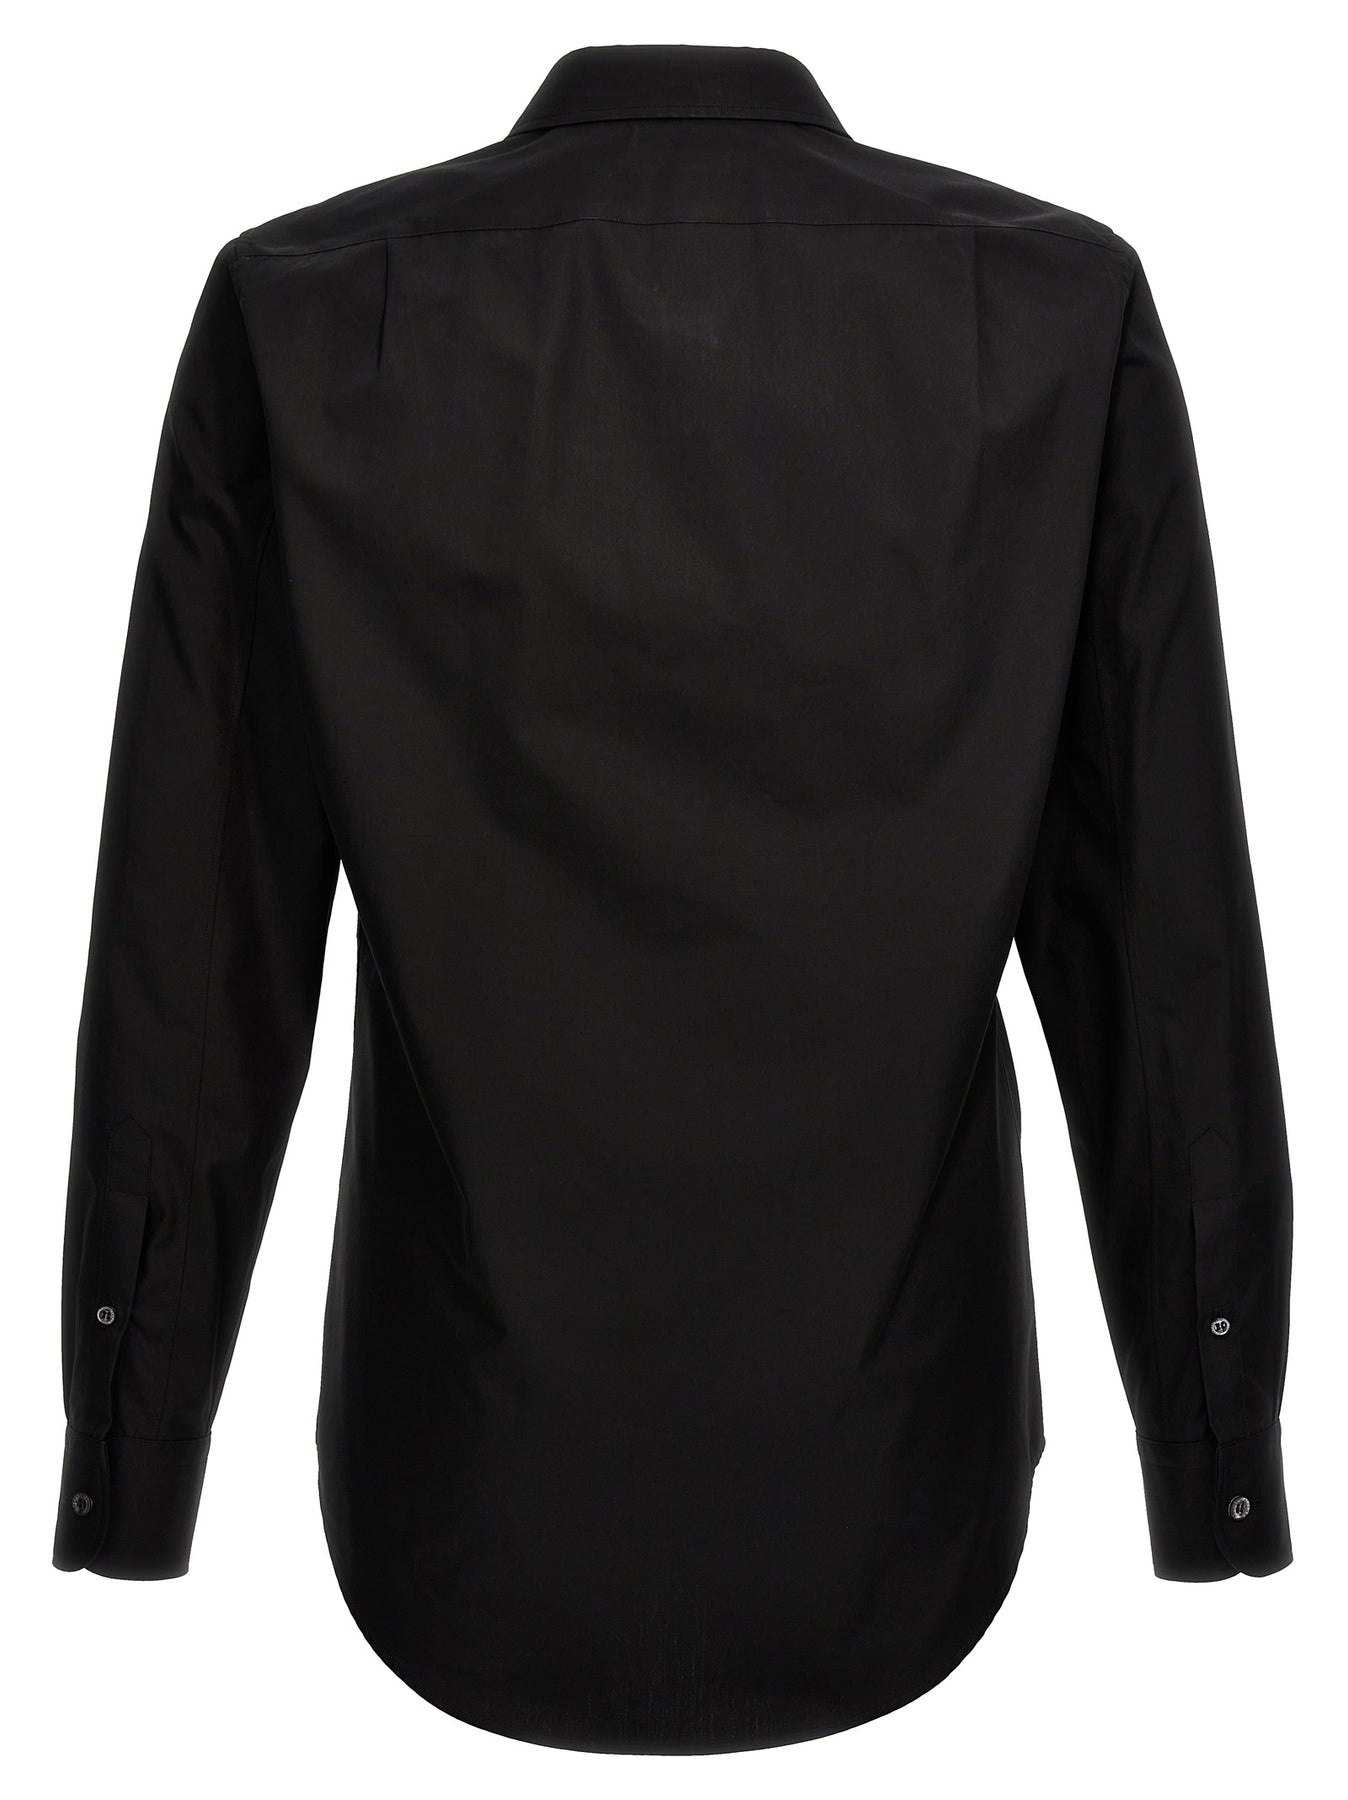 Embroidered Collar Shirt Shirt, Blouse Black - 2